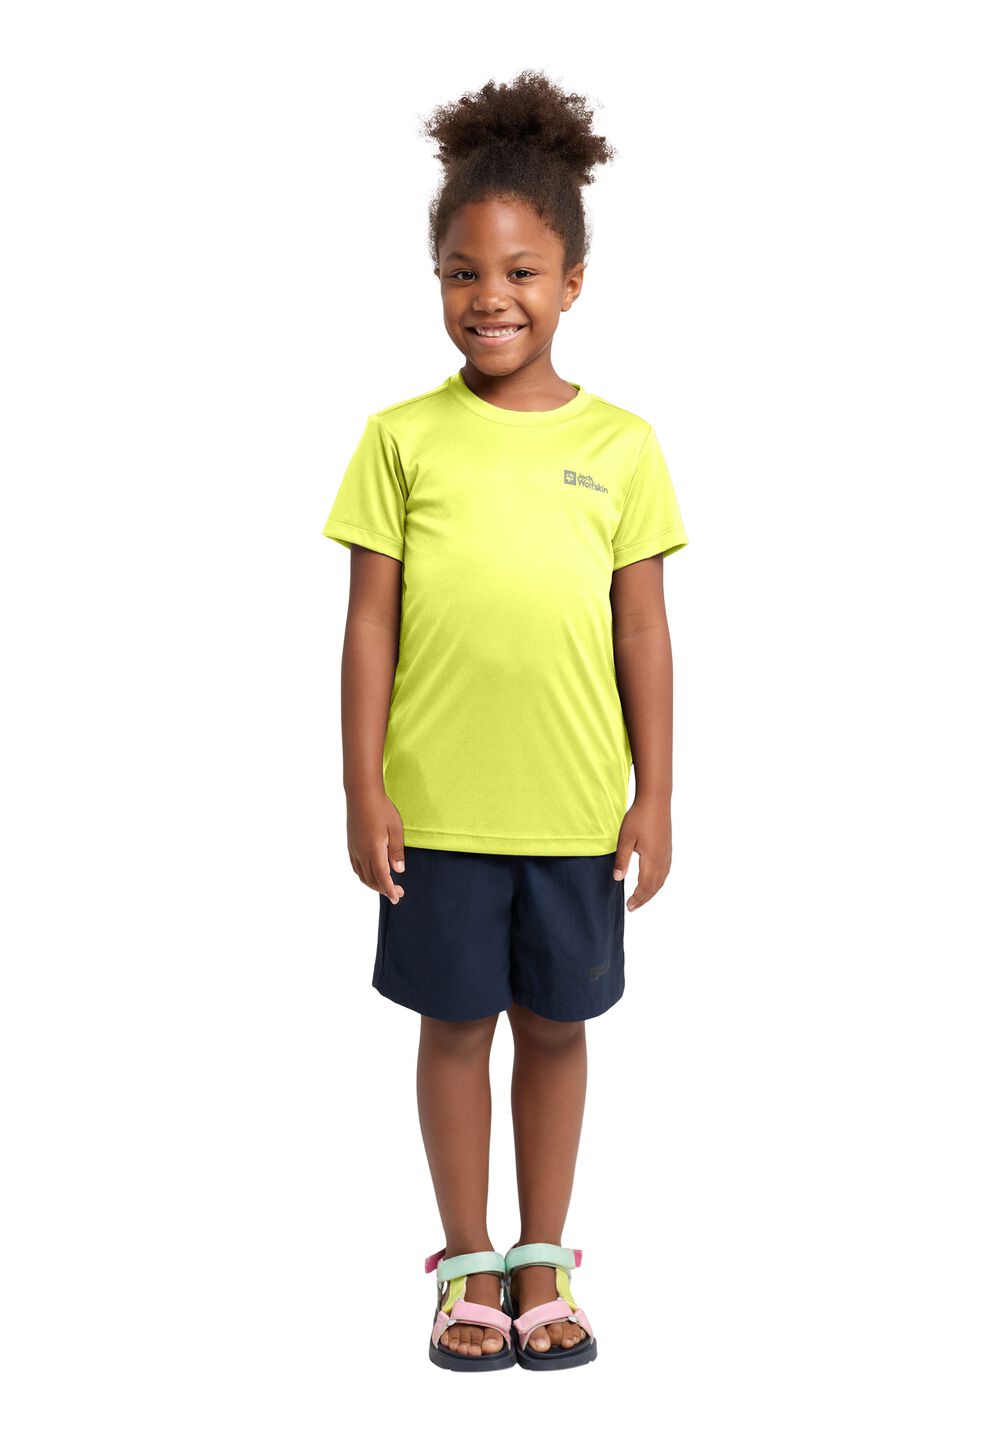 Jack Wolfskin Active Solid T-Shirt Kids Functioneel shirt Kinderen 128 oranje firefly